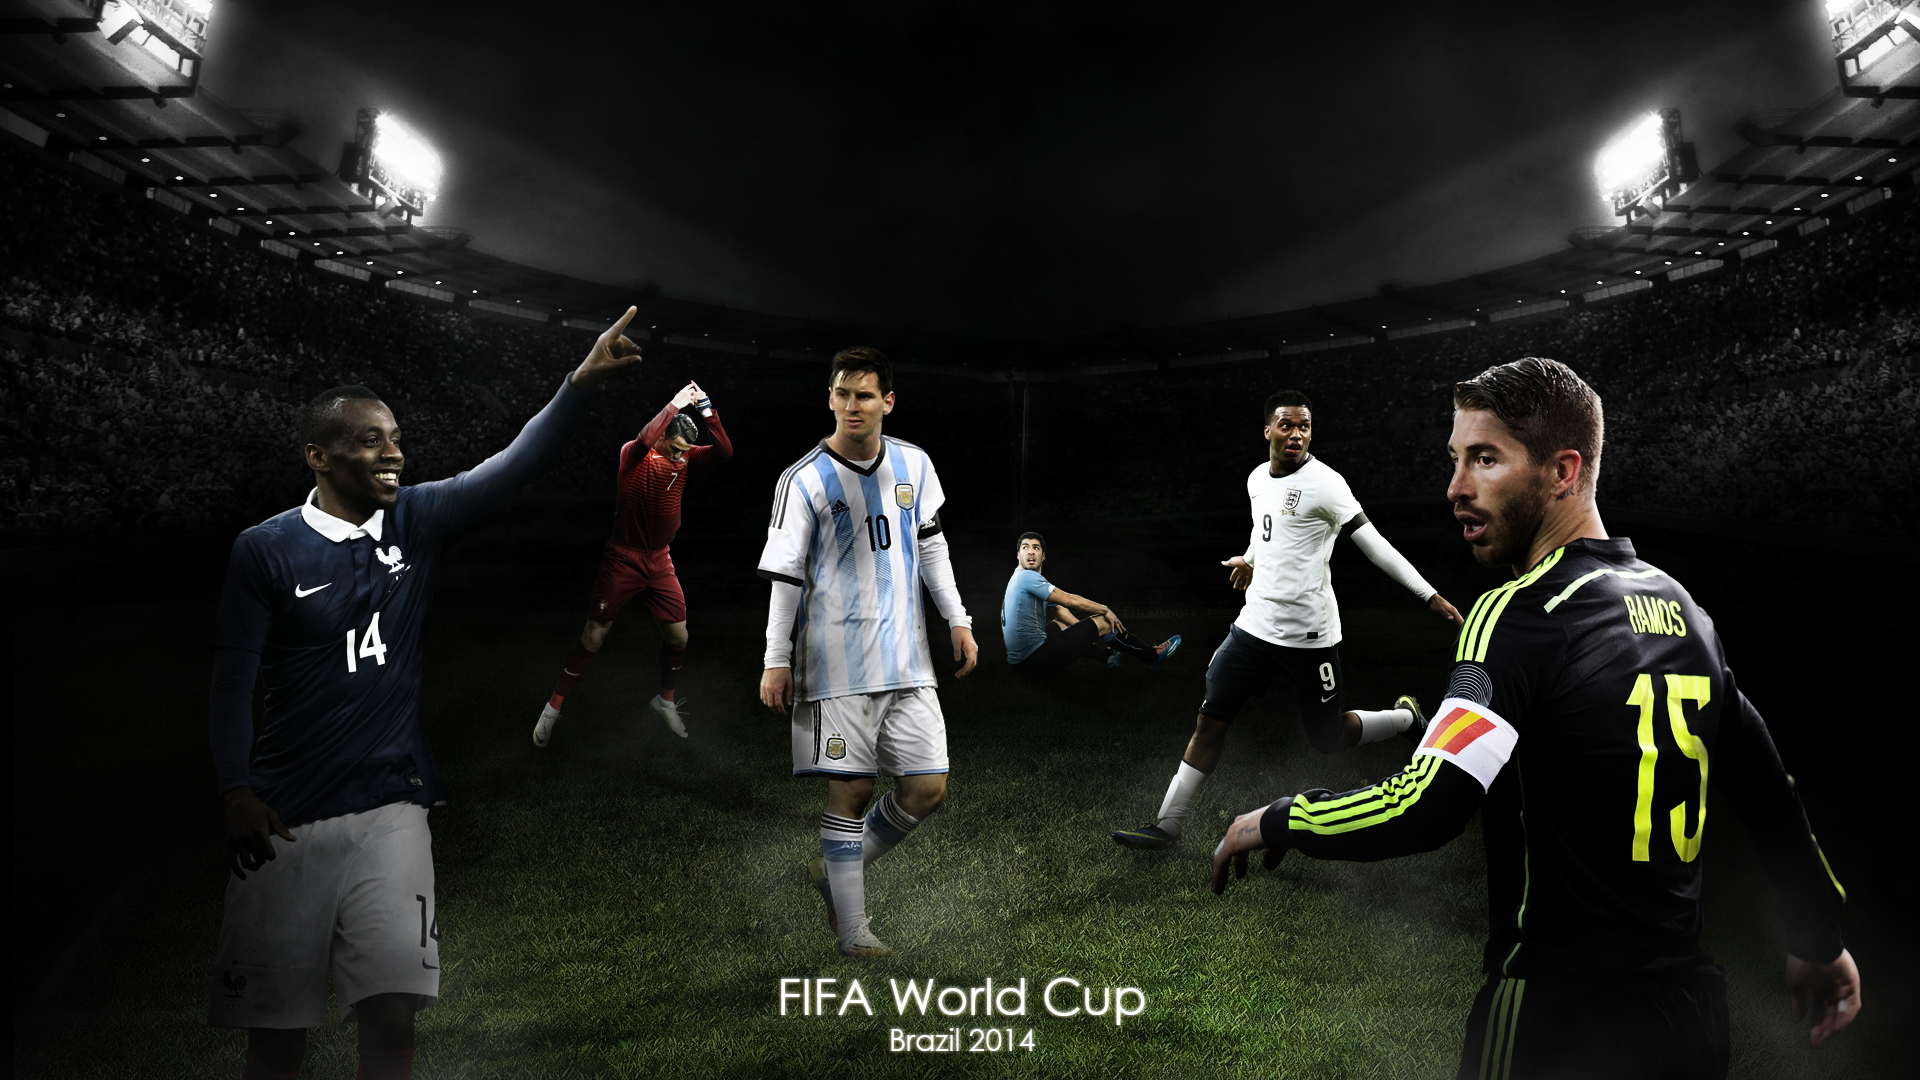 Luis Suarez. HD Football Wallpaperhdfootballwallpaper.wordpress.com